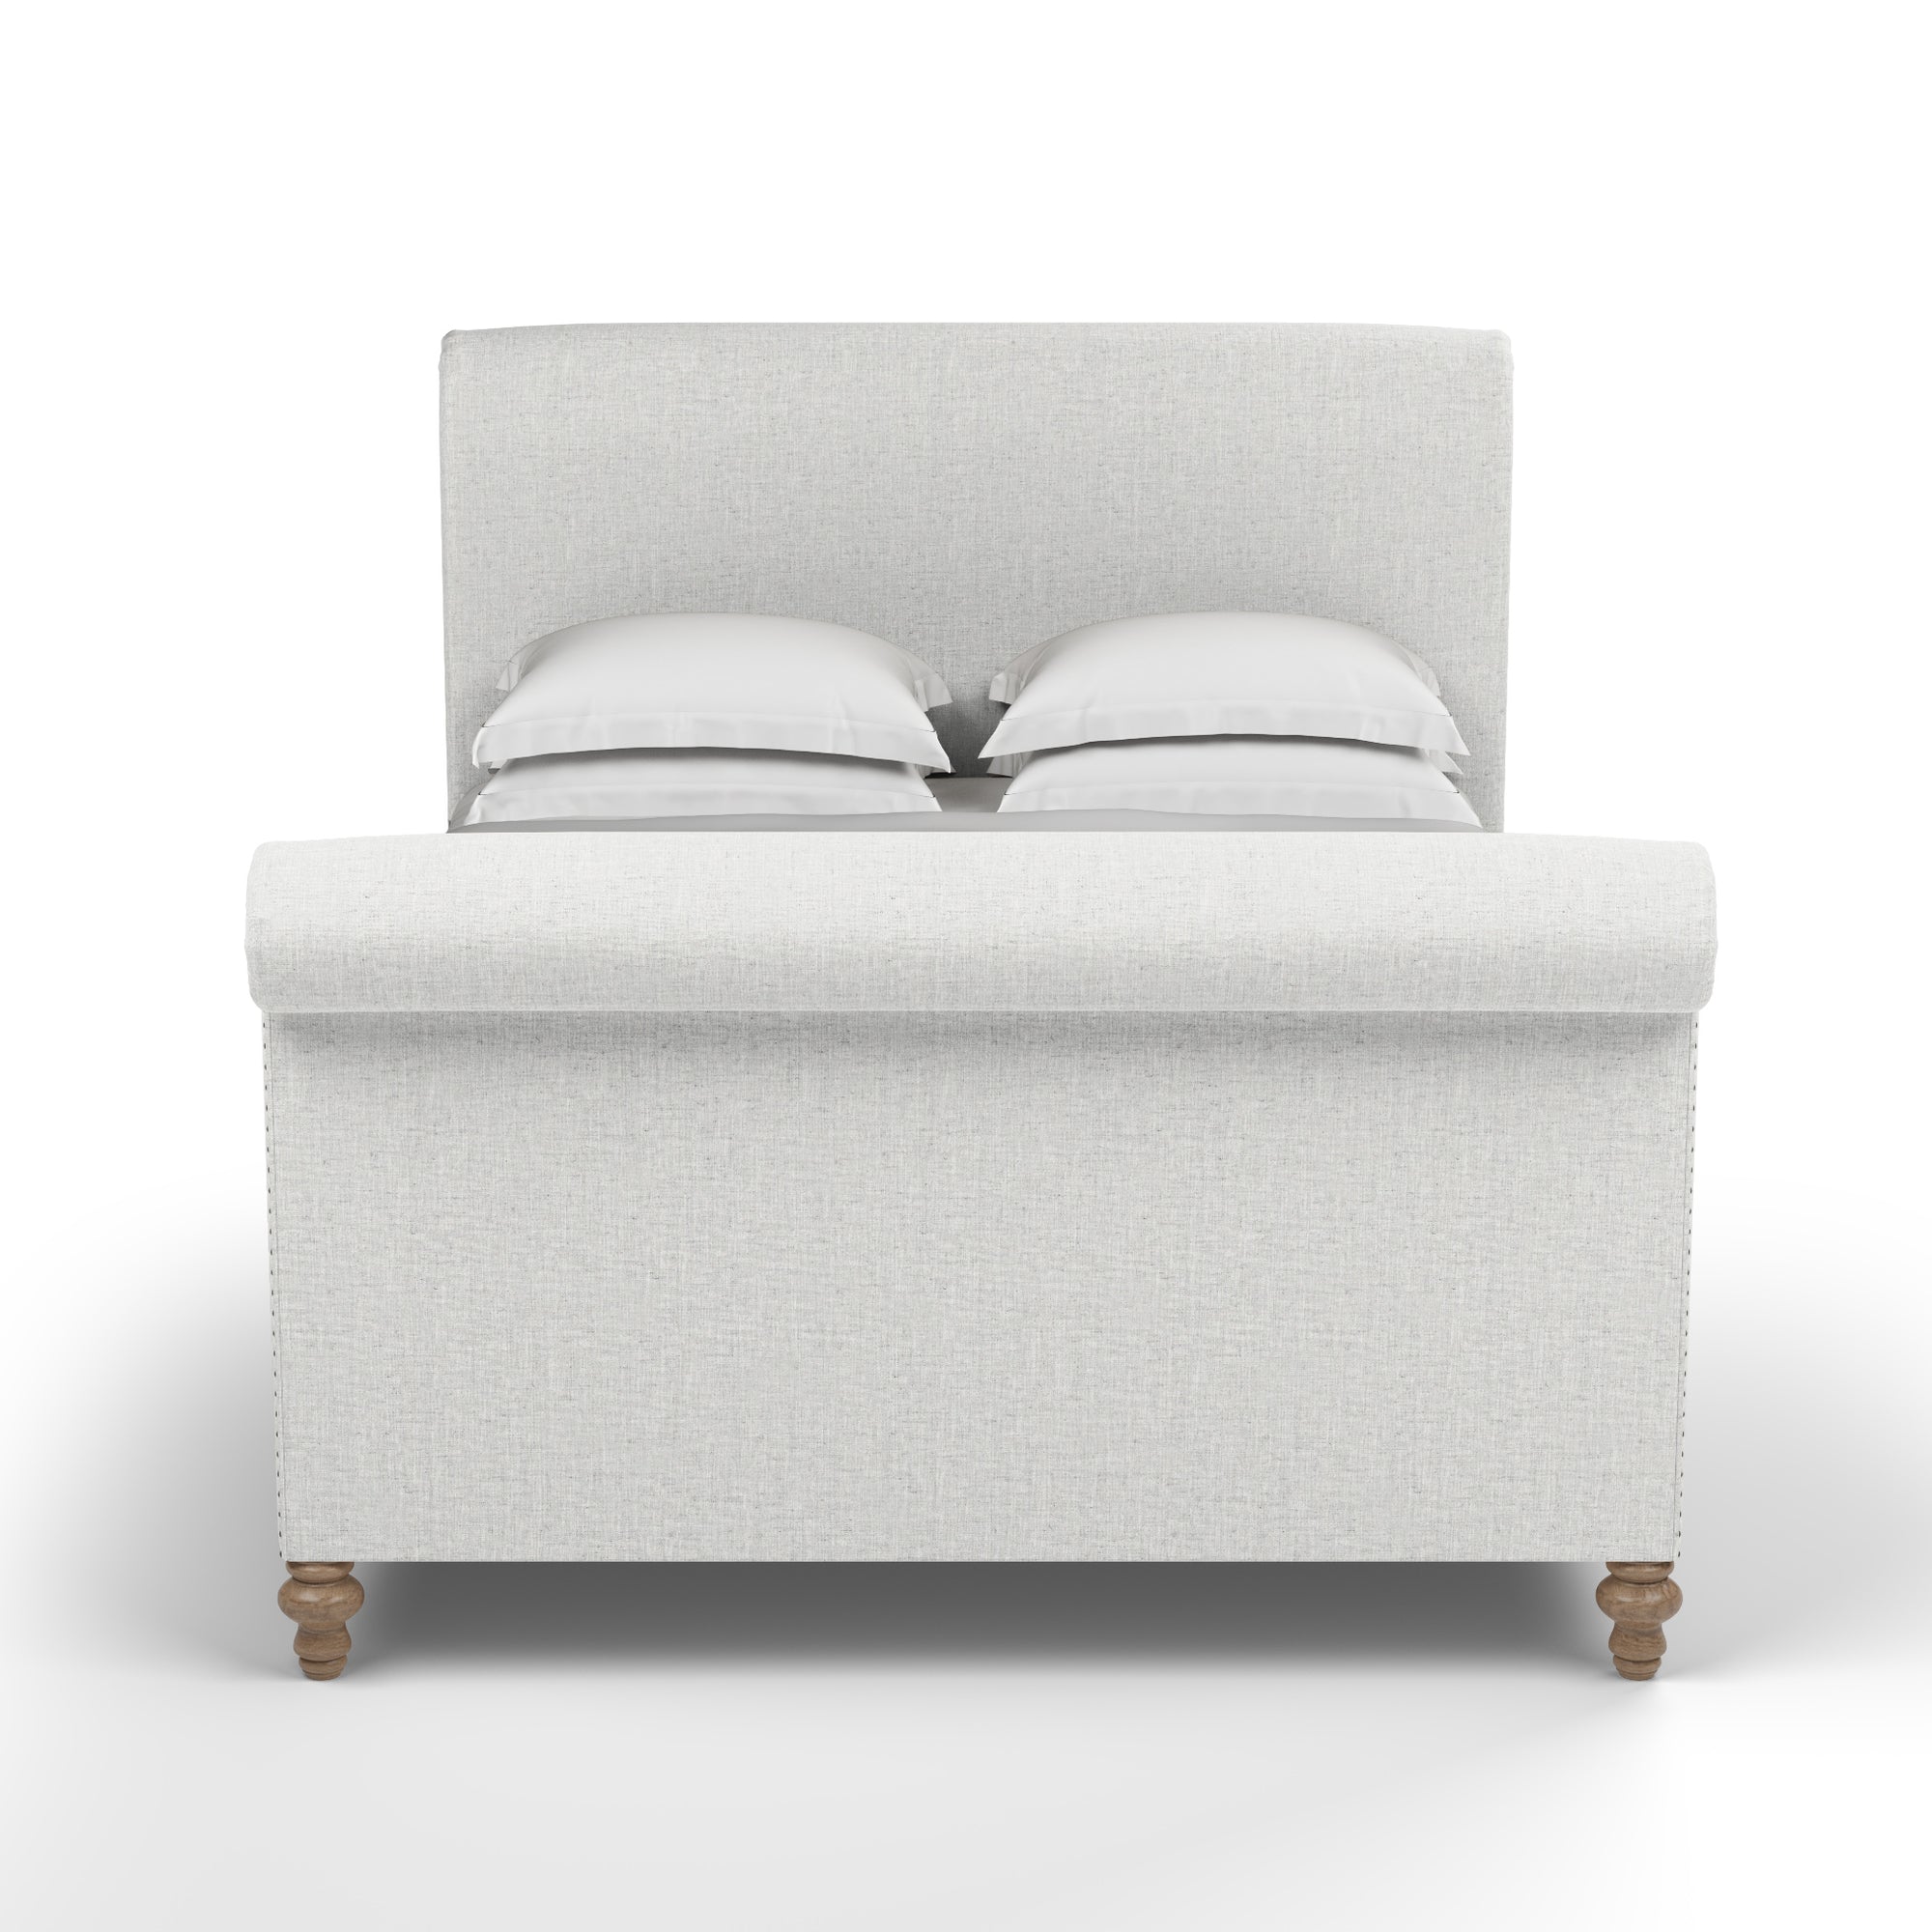 Empire Scroll Bed w/ Footboard - Blanc Box Weave Linen